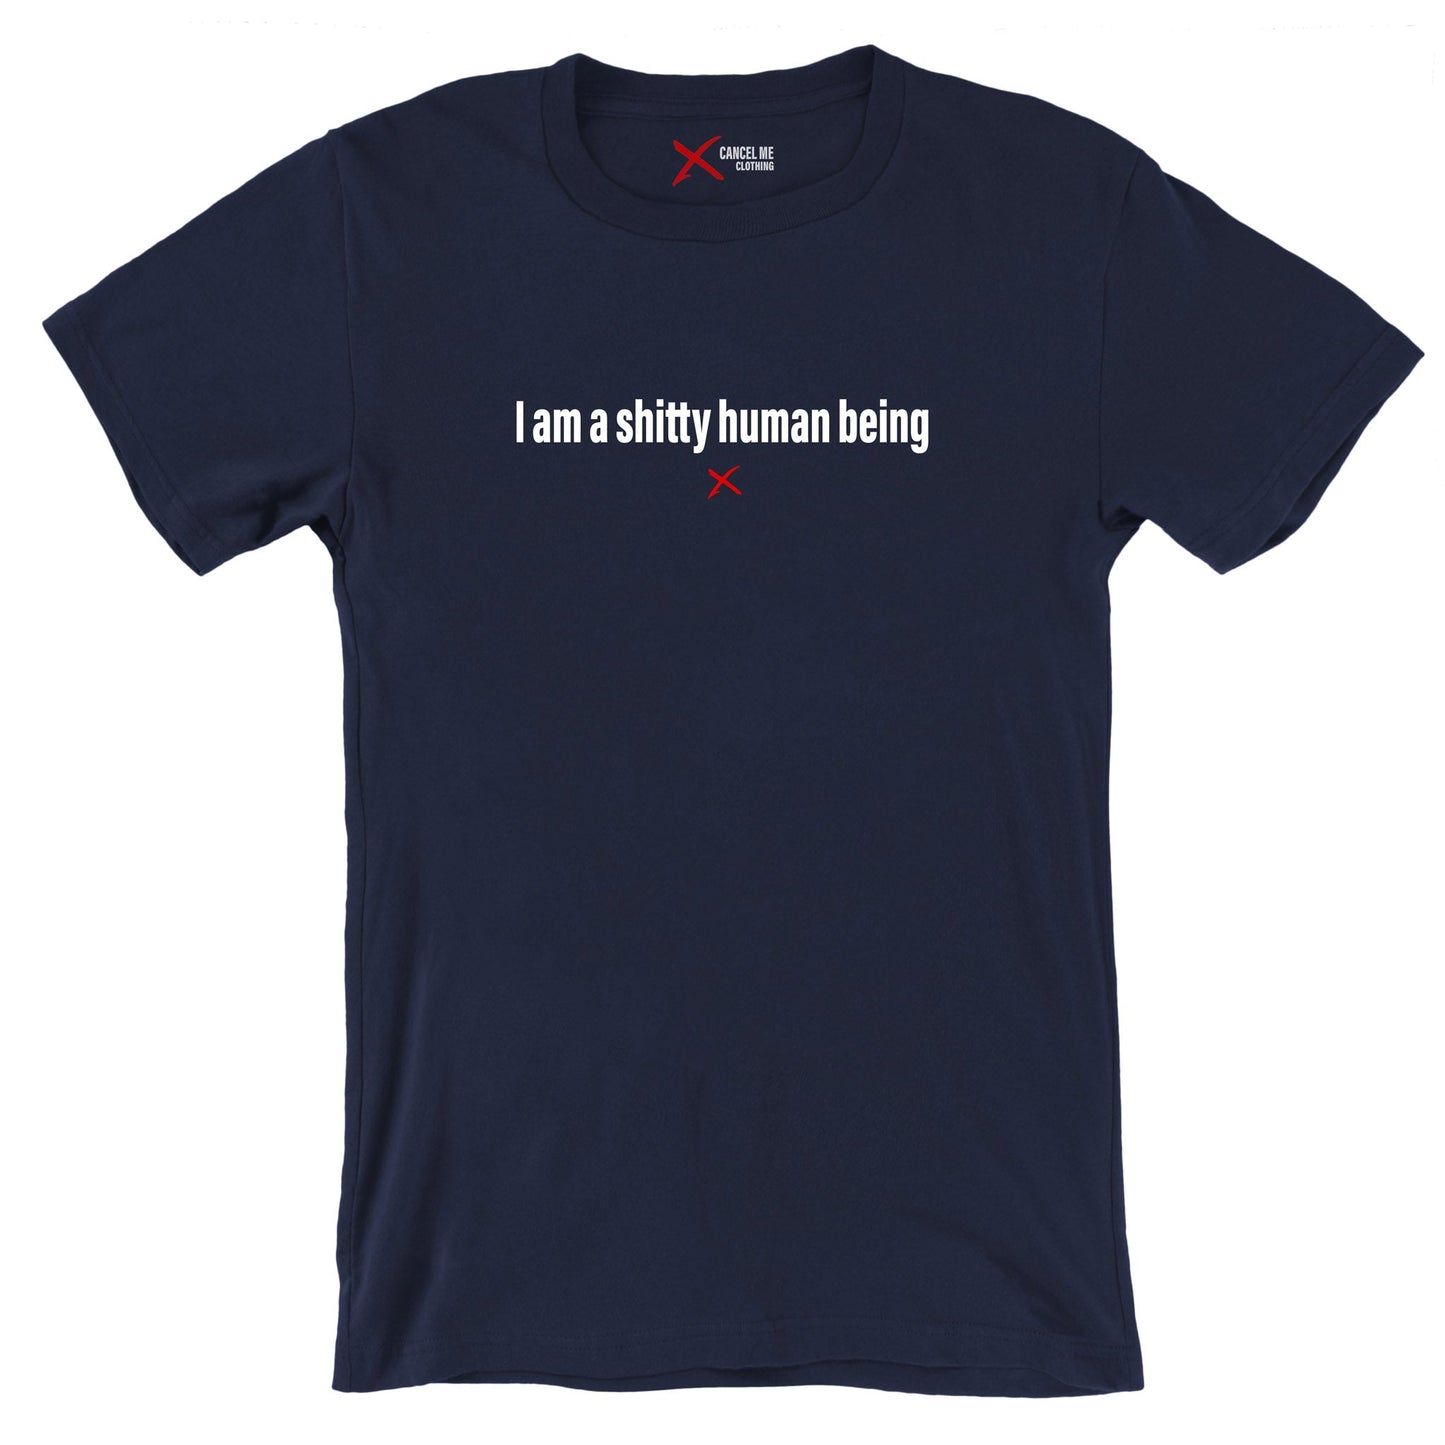 I am a shitty human being - Shirt